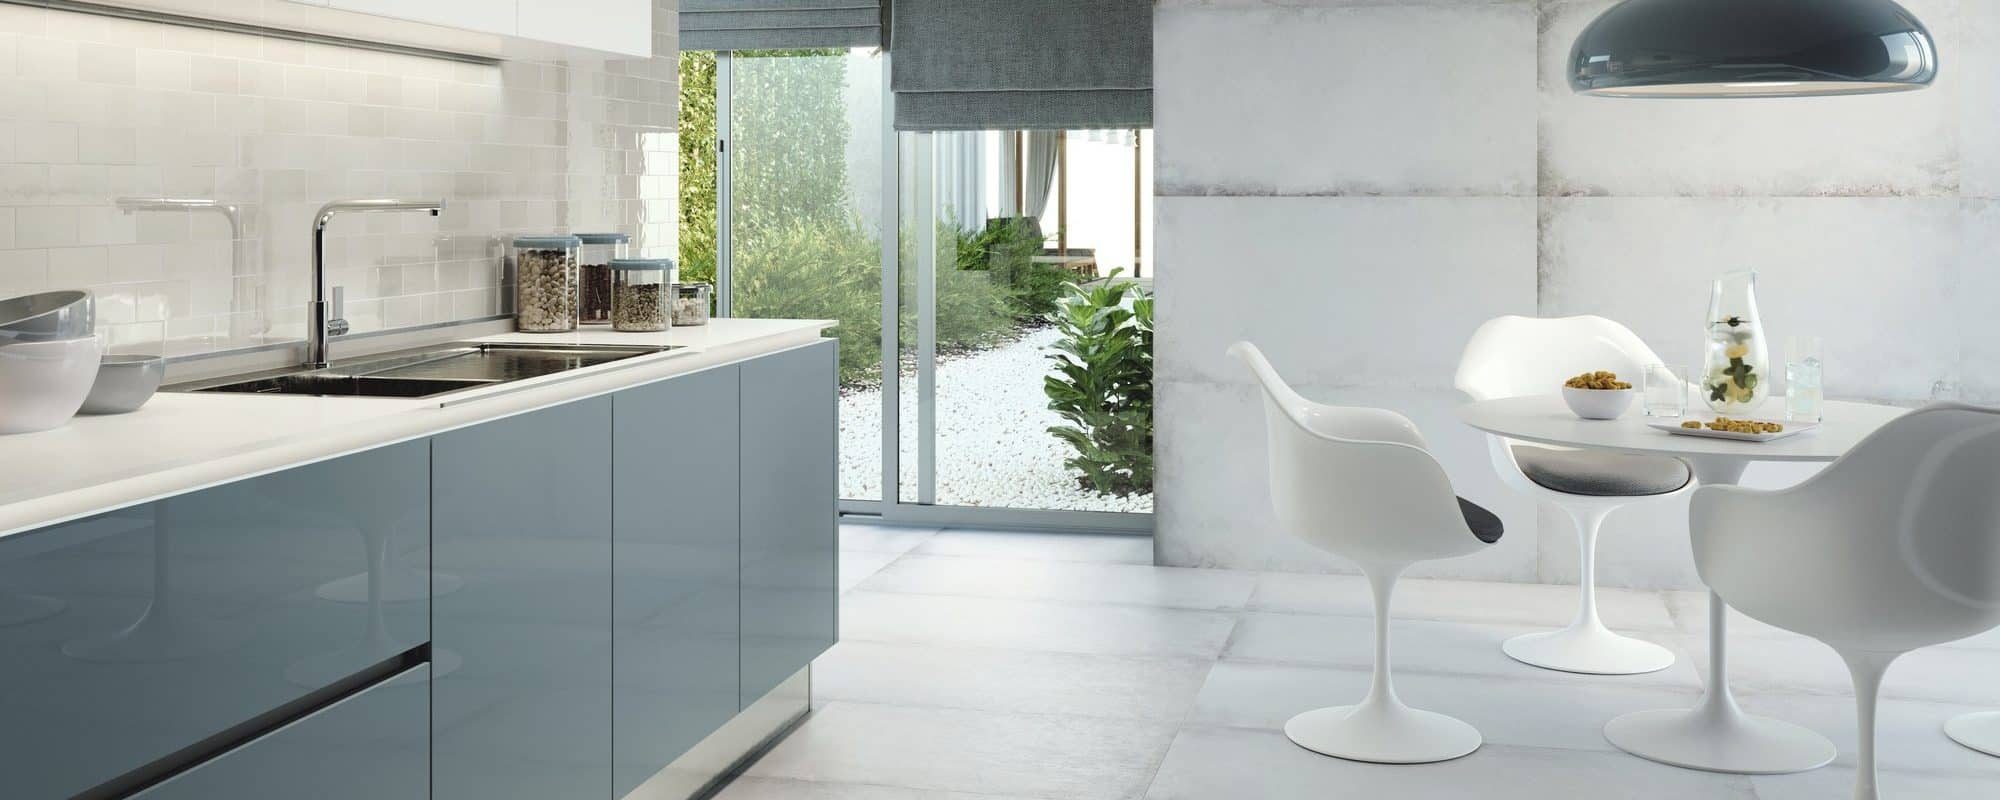 NAXOS cement effect porcelain bathroom tiles uk slider 6